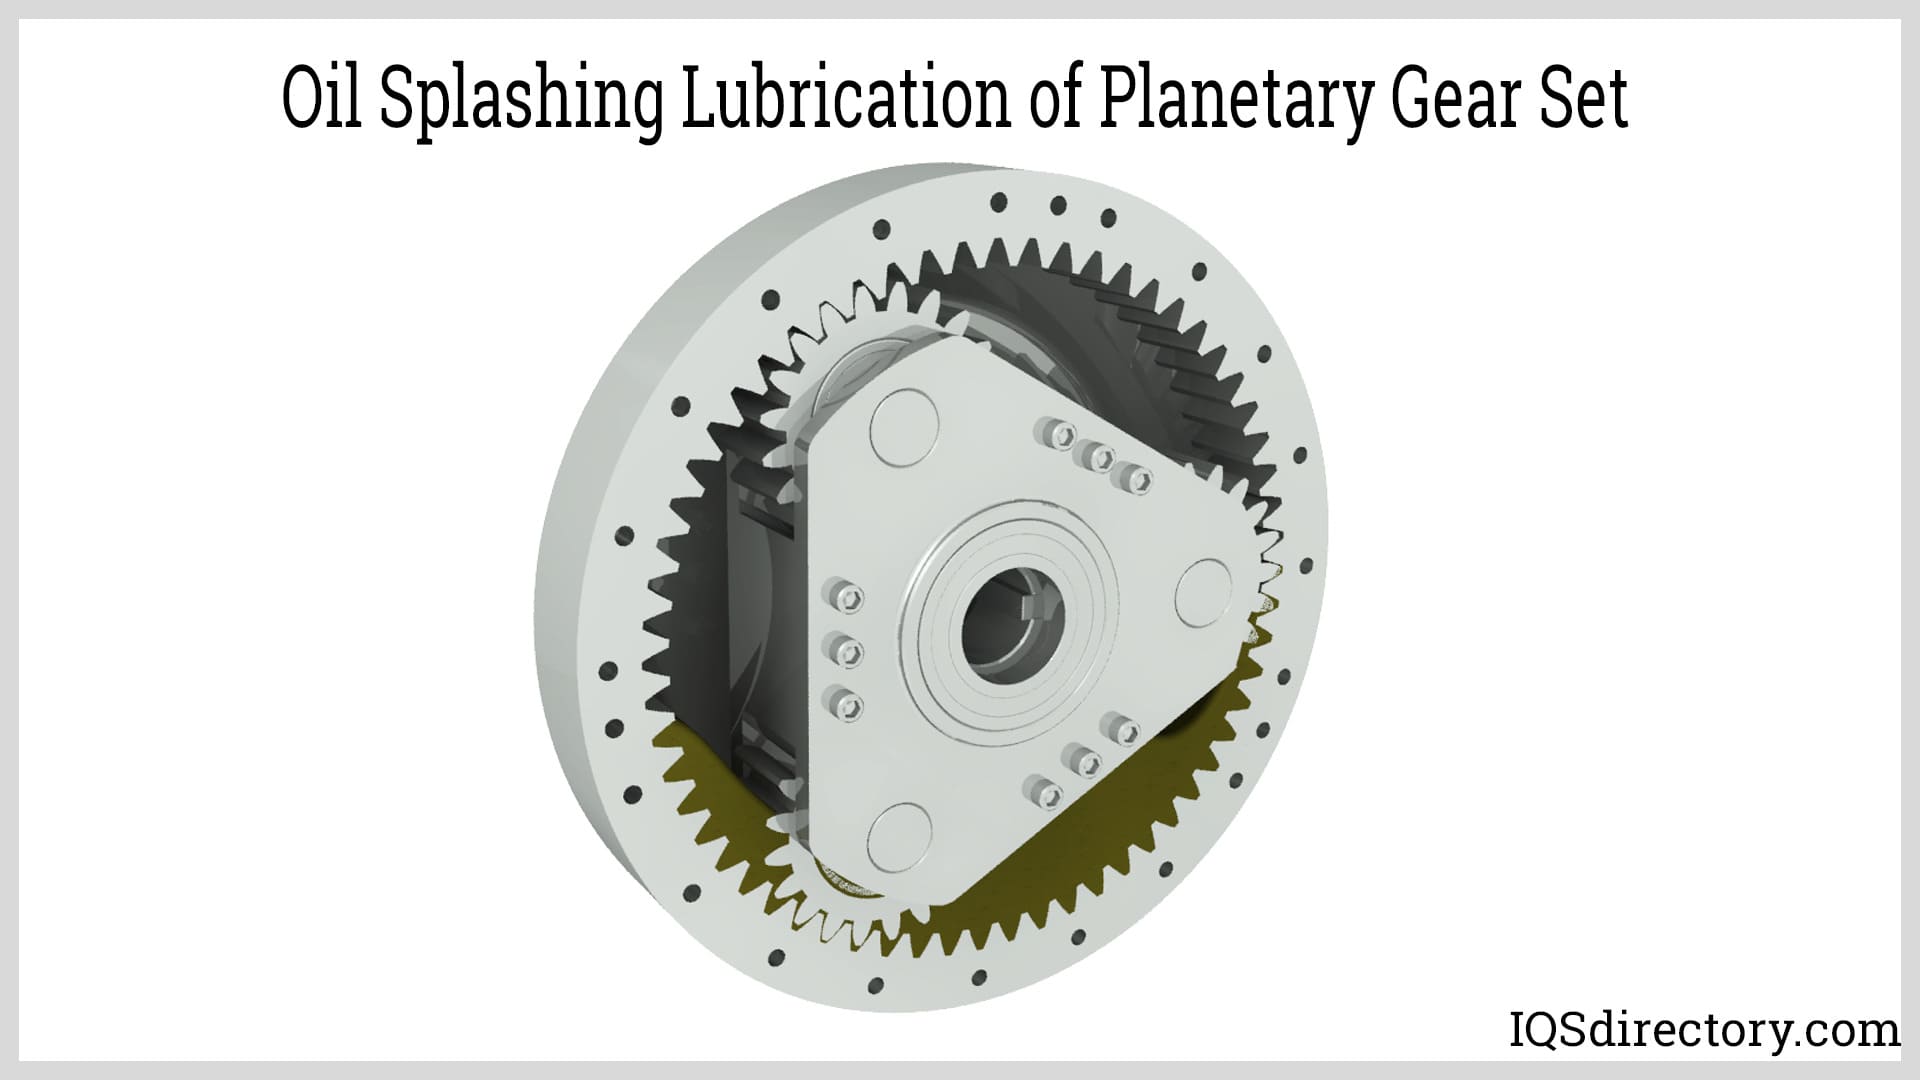 Oil Splashing Lubrication of Planetary Gear Set